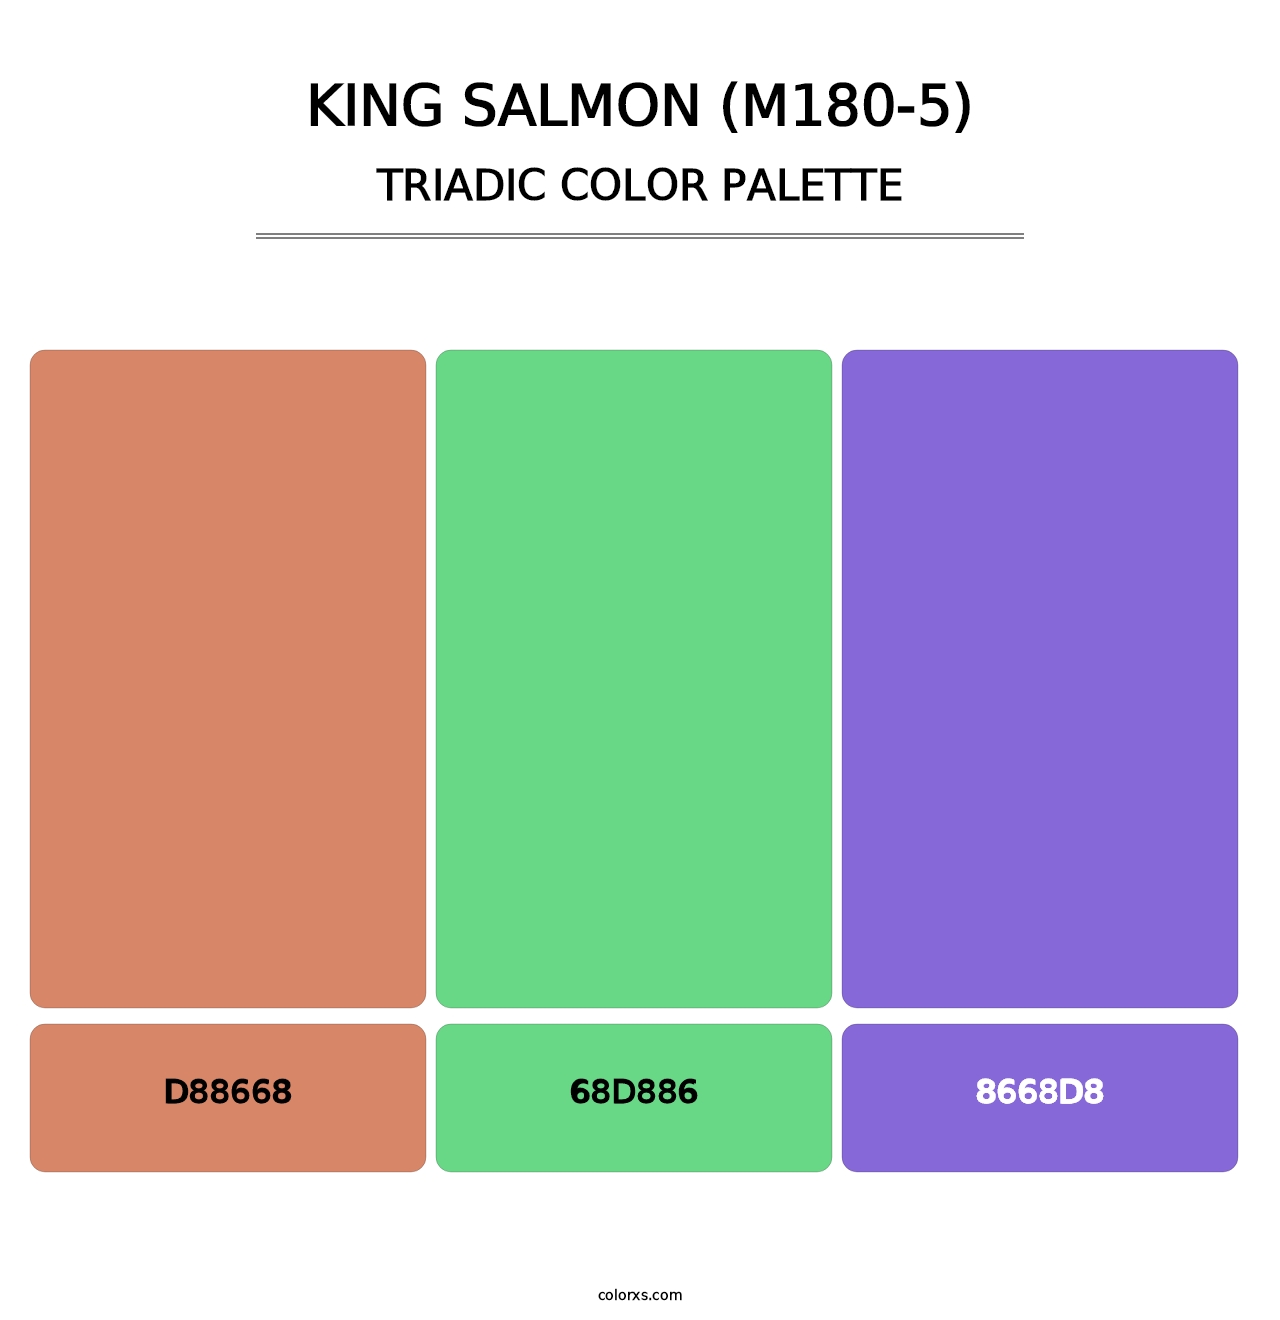 King Salmon (M180-5) - Triadic Color Palette